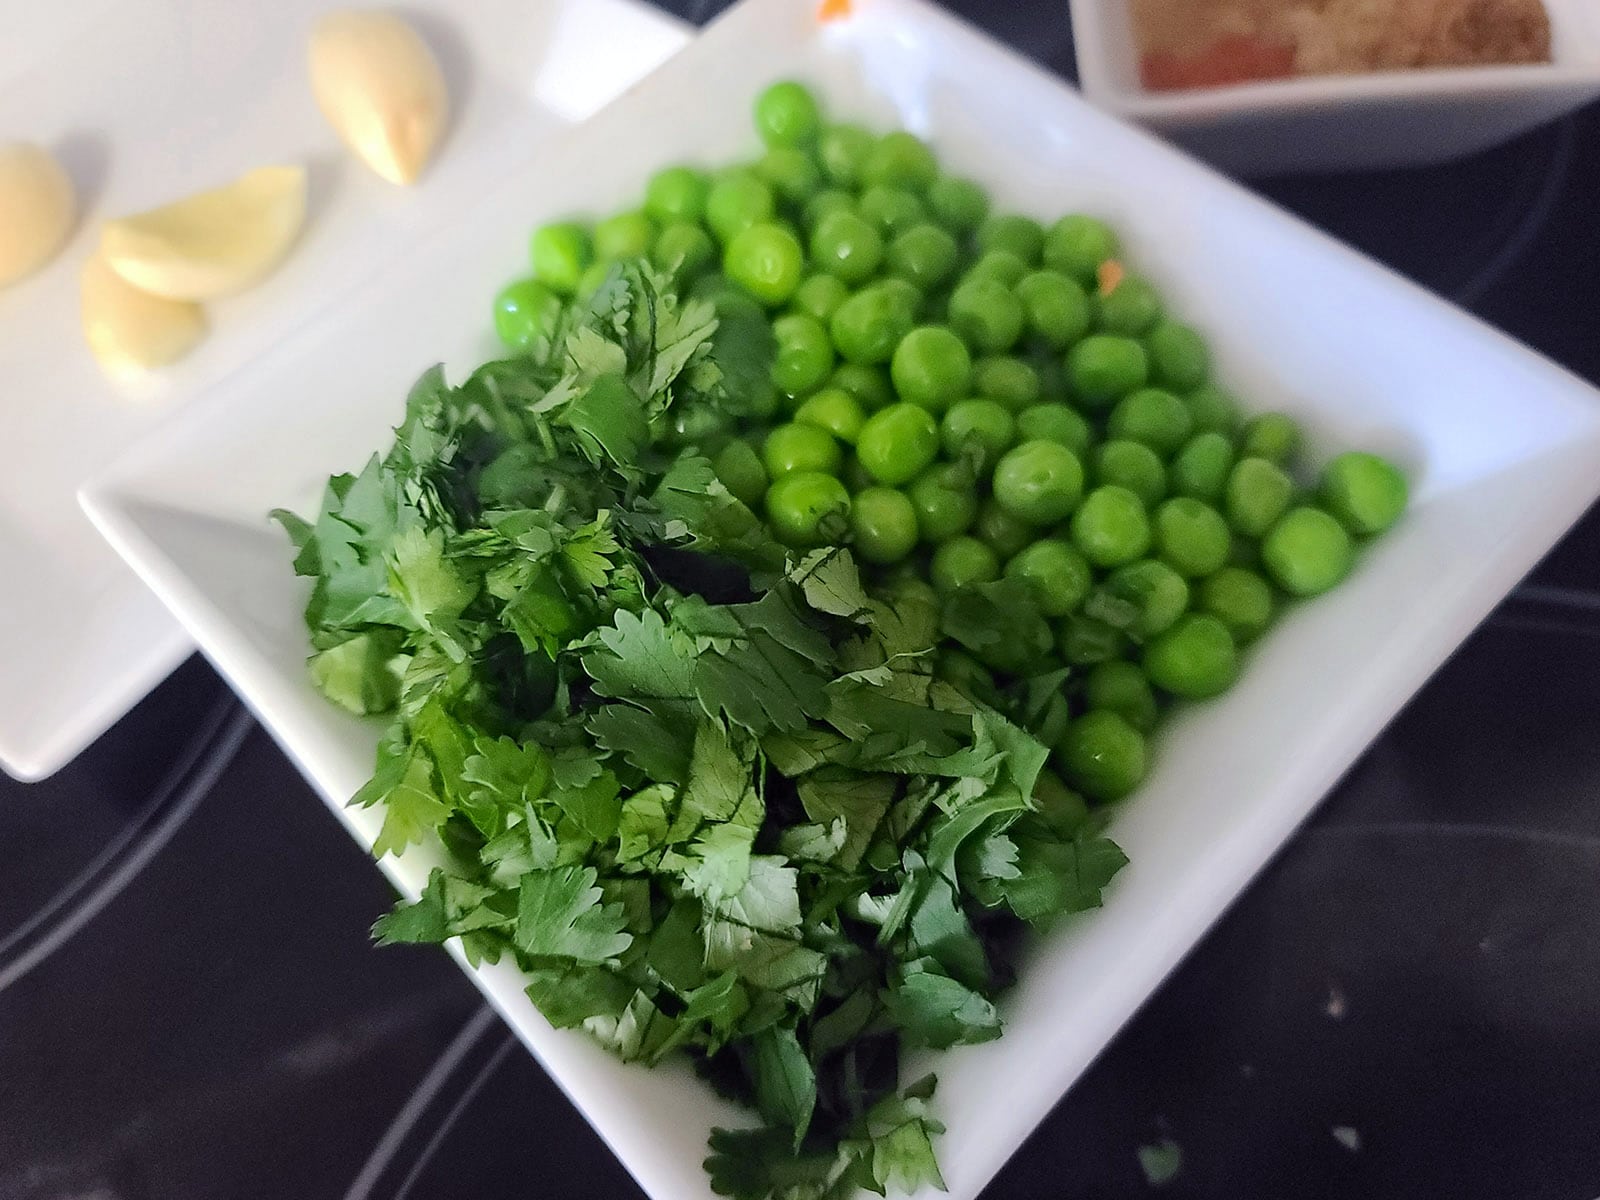 A bowl of peas and chopped cilantro.